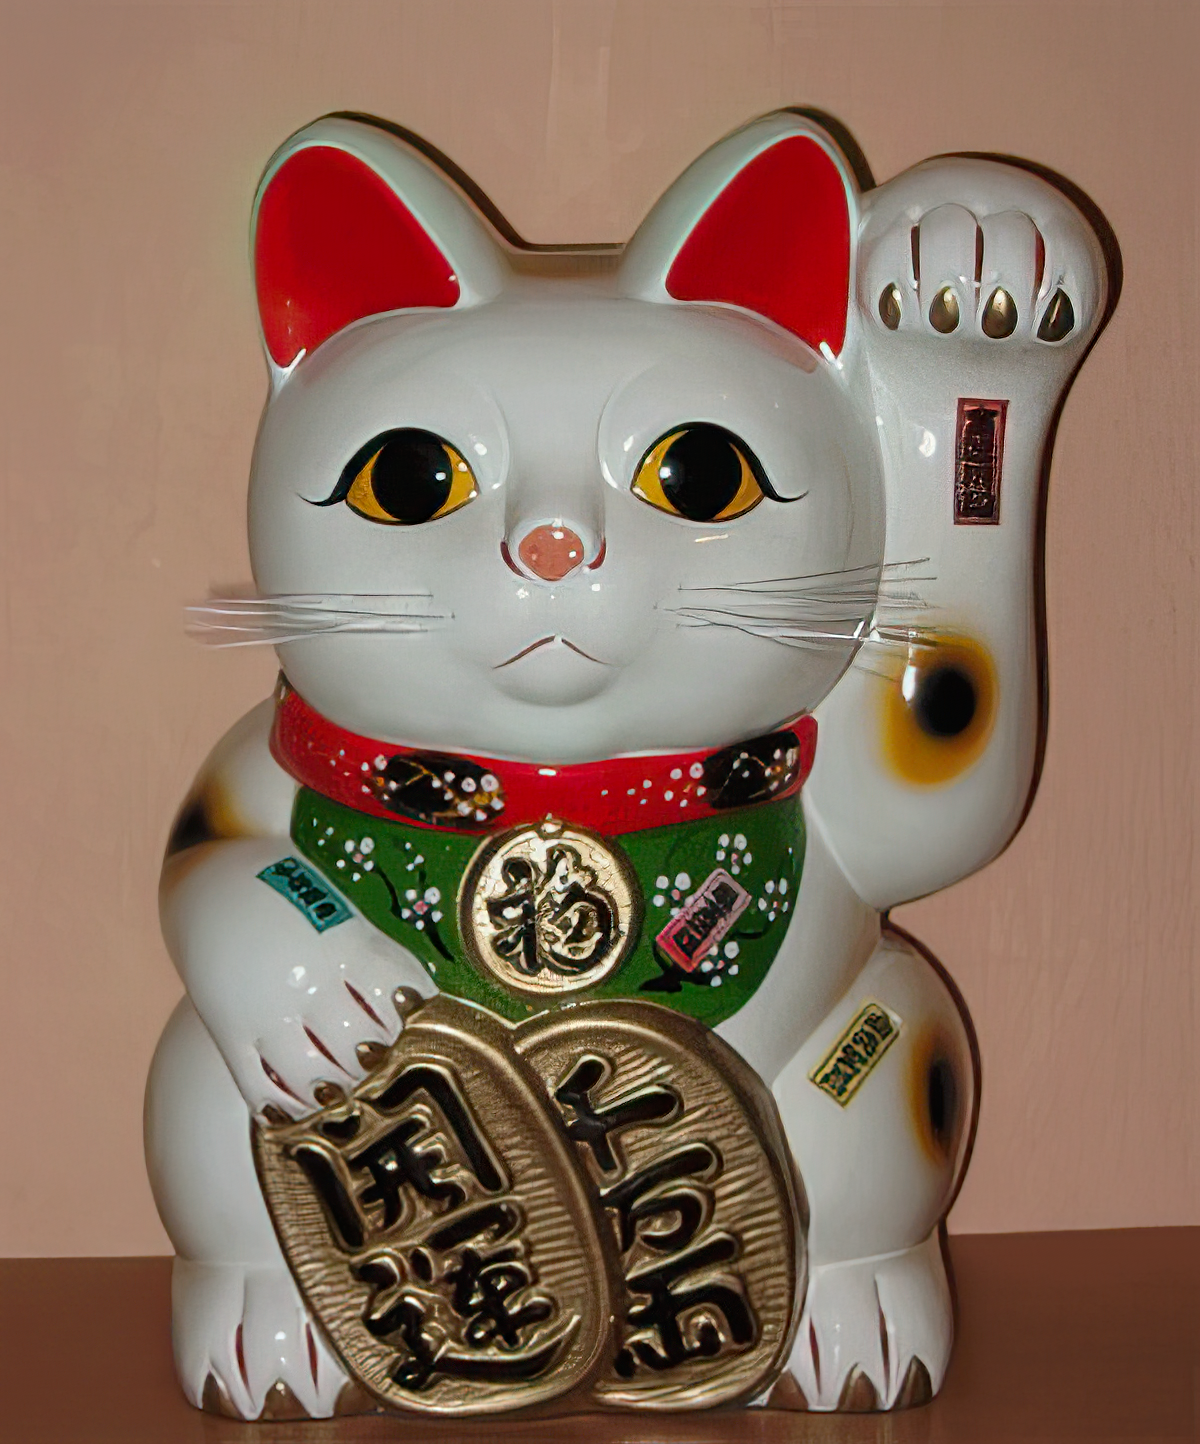 The cat statue Maneki Neko with a gold coin